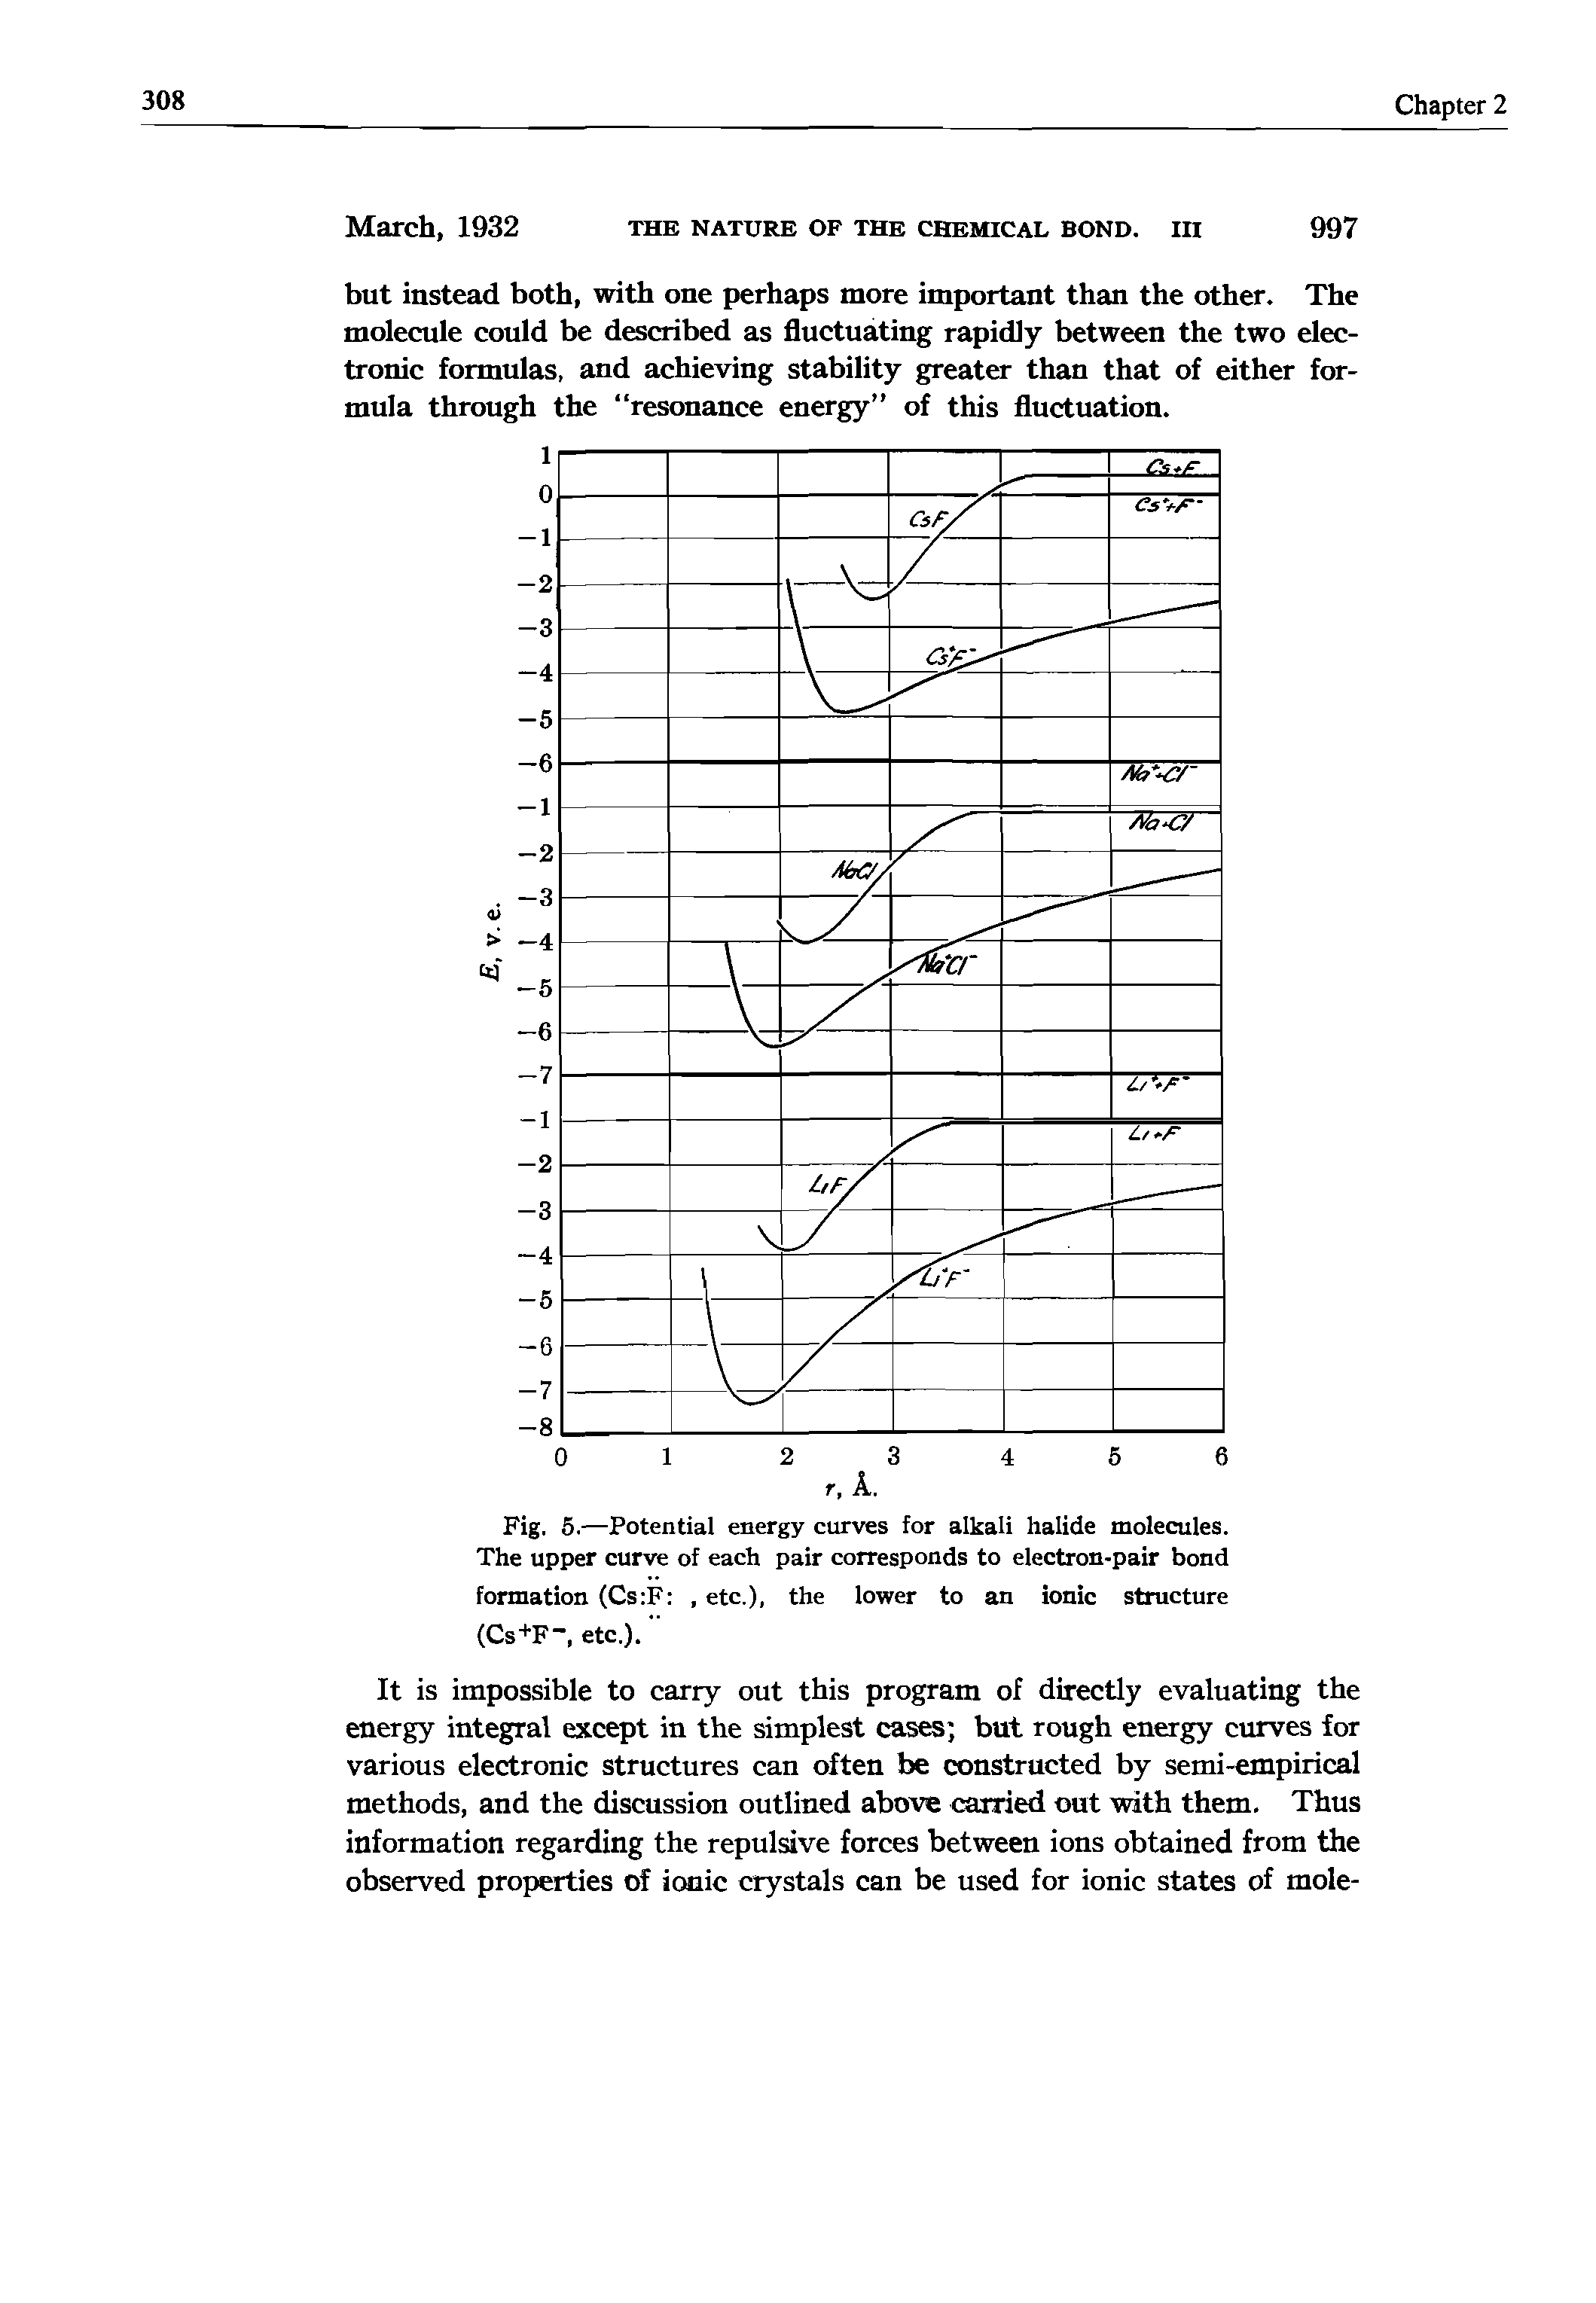 Fig. 5.—Potential energy curves for alkali halide molecules.